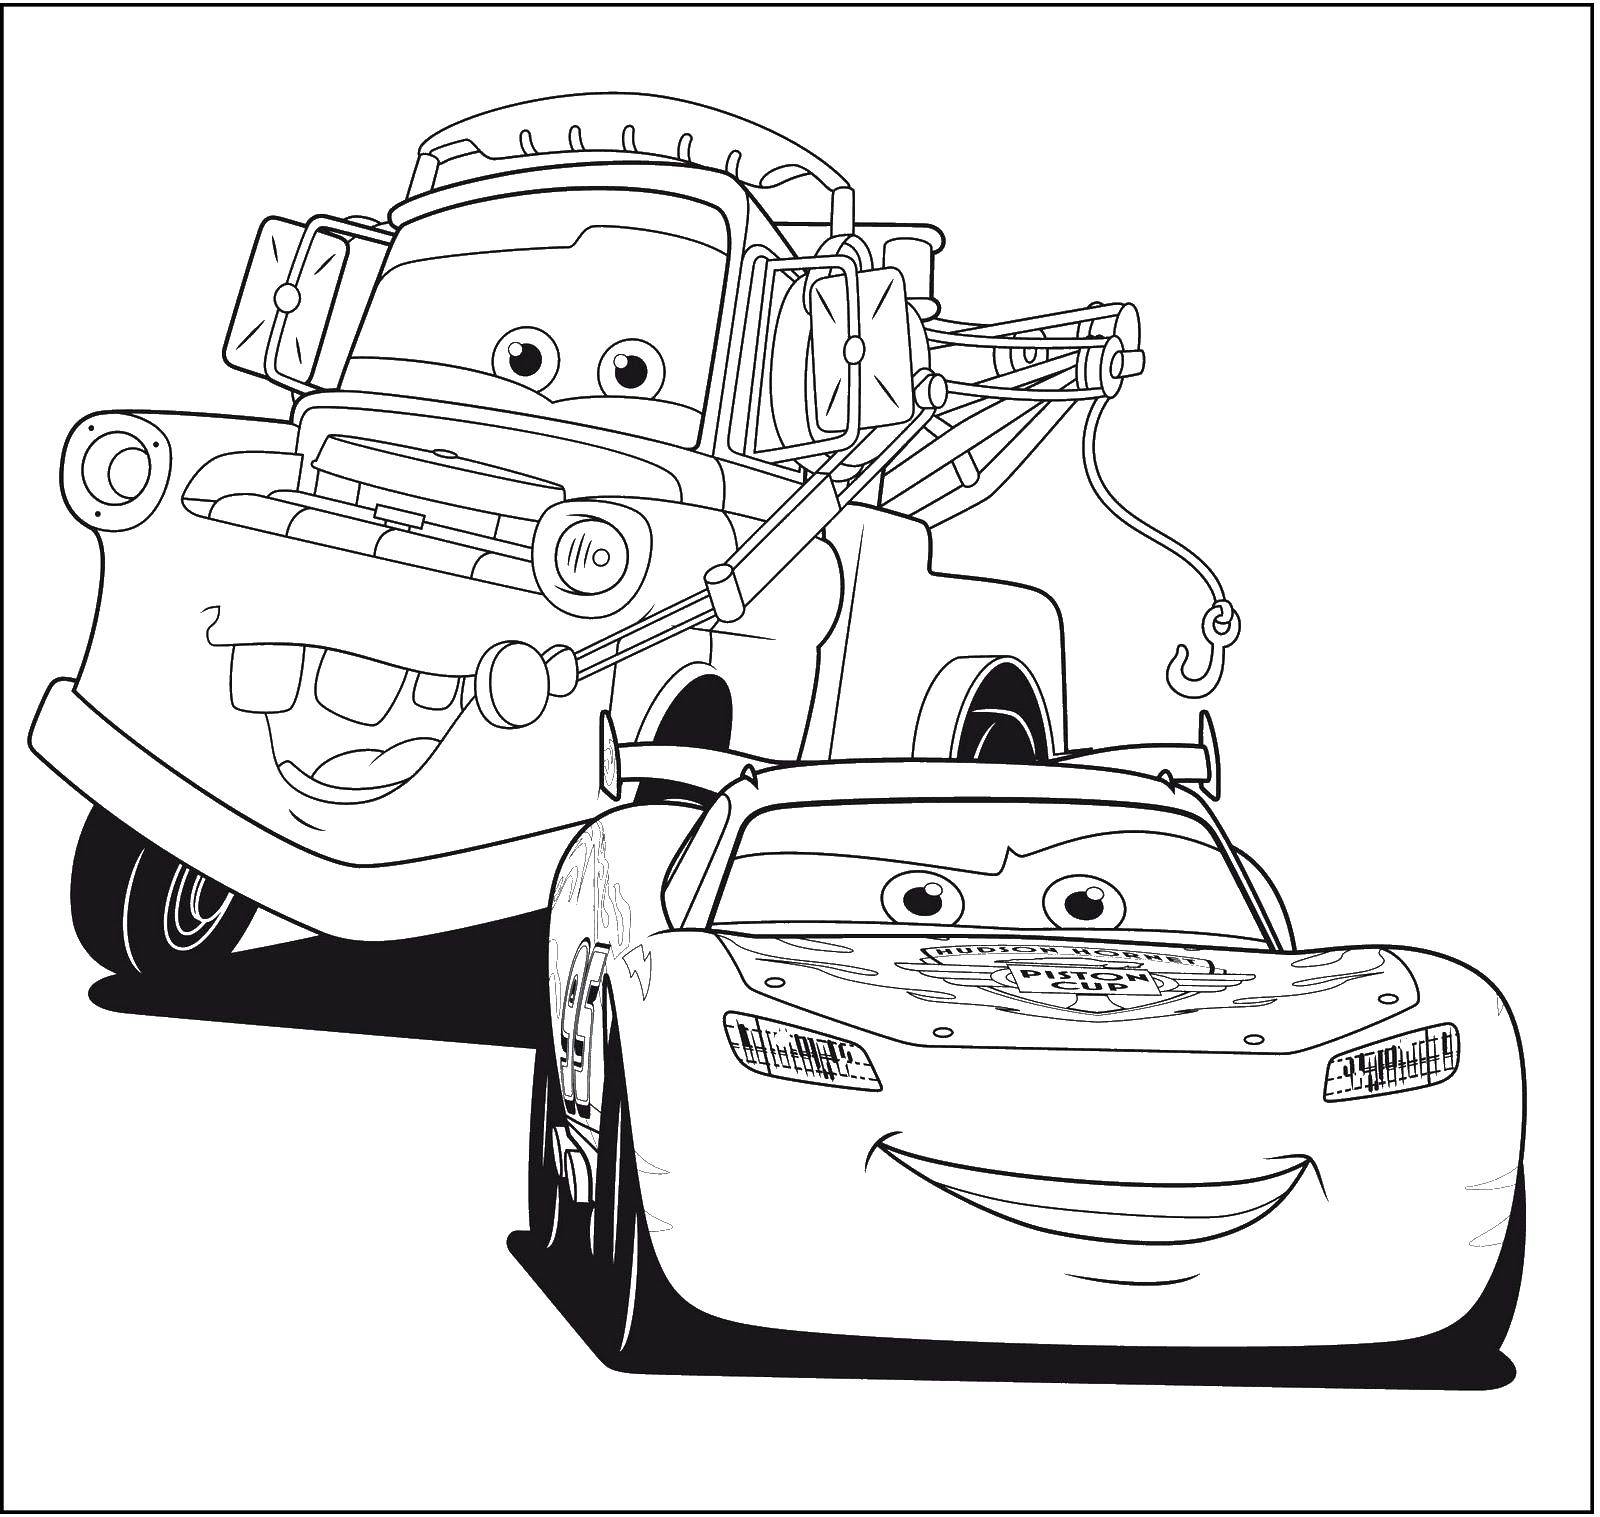 Coloring Cartoon cars. Category Wheelbarrows. Tags:  cartoon, cars, cars.